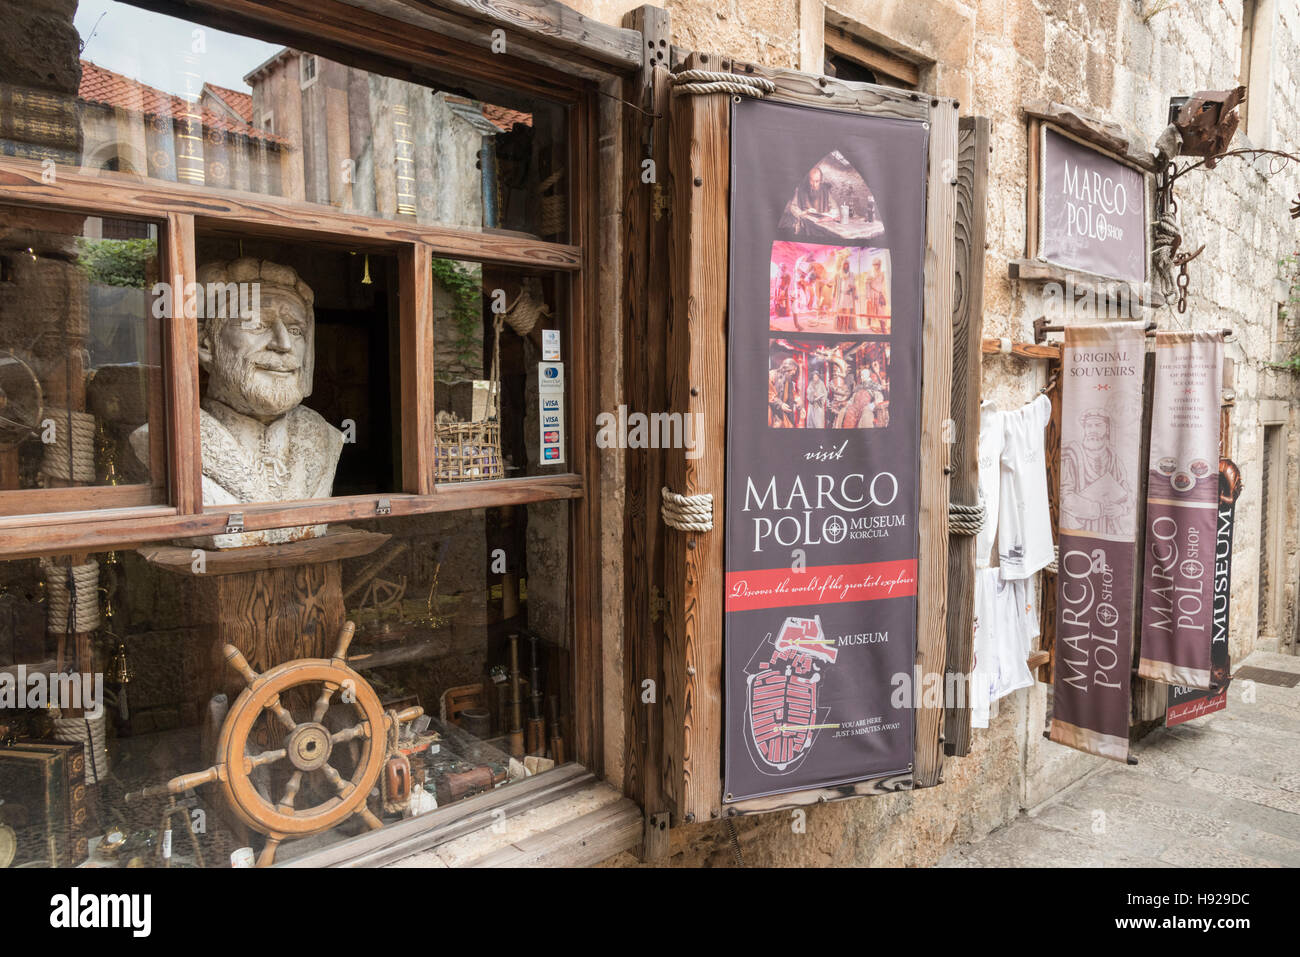 The Marco Polo museum shop in Korcula Croatia Stock Photo - Alamy